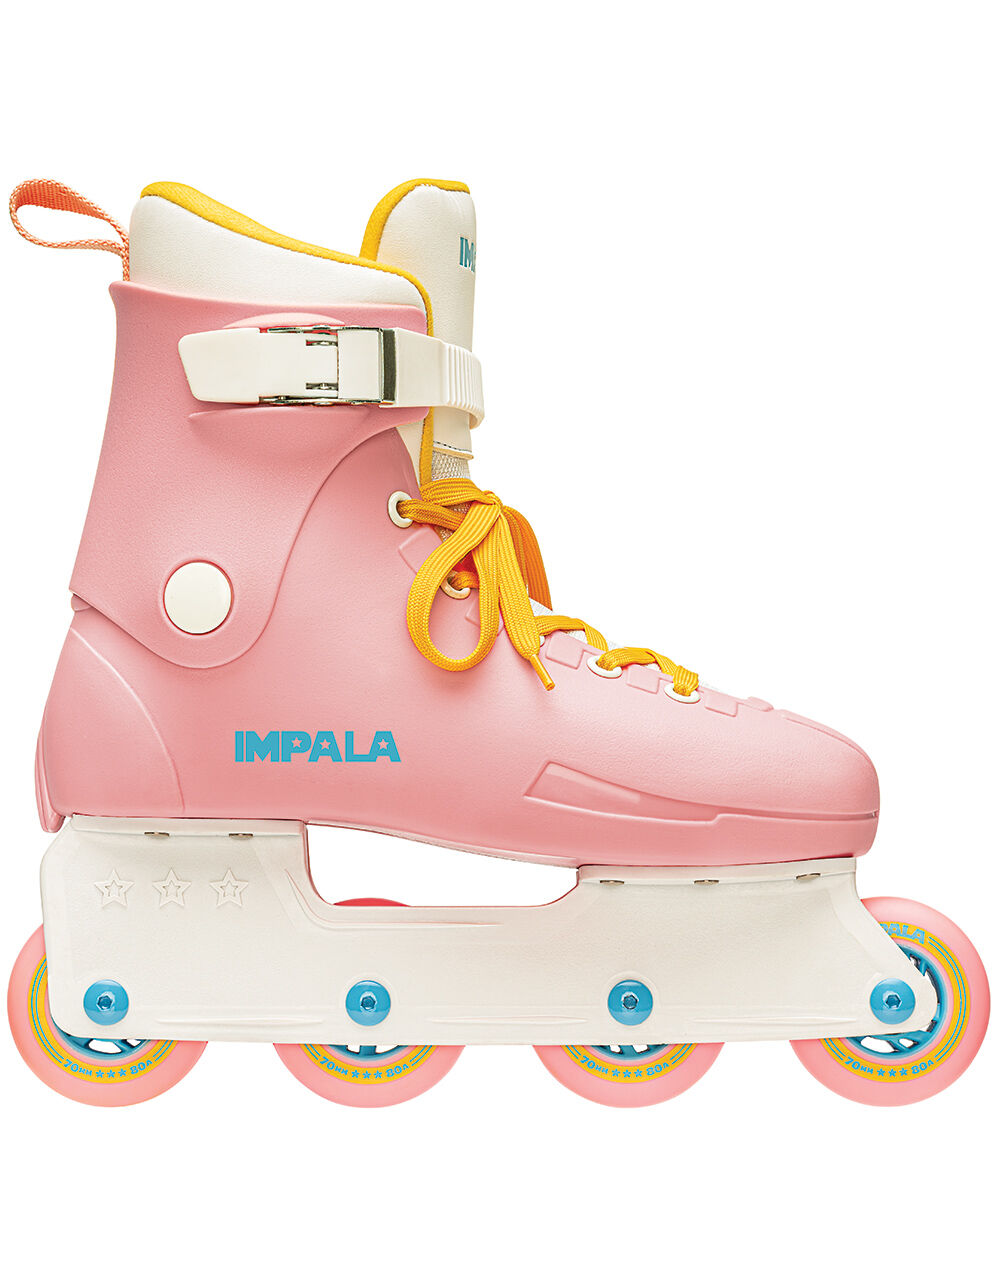 Impala Rollerskates - Patines para mujer (niñas grandes/adultas),  Rosado/Amarillo